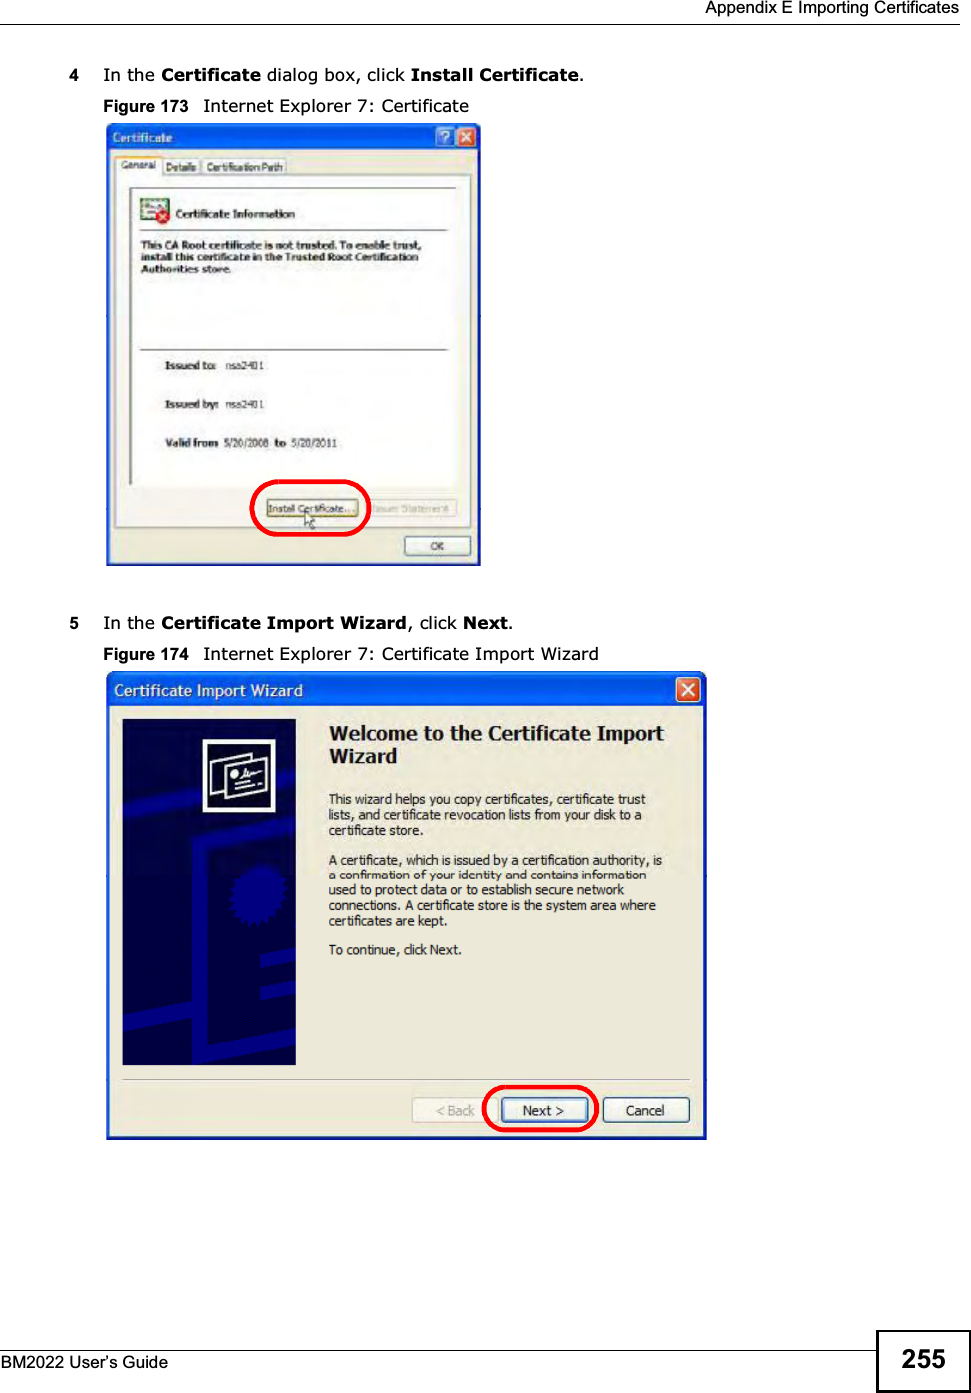  Appendix E Importing CertificatesBM2022 Users Guide 2554In the Certificate dialog box, click Install Certificate.Figure 173   Internet Explorer 7: Certificate5In the Certificate Import Wizard, click Next.Figure 174   Internet Explorer 7: Certificate Import Wizard